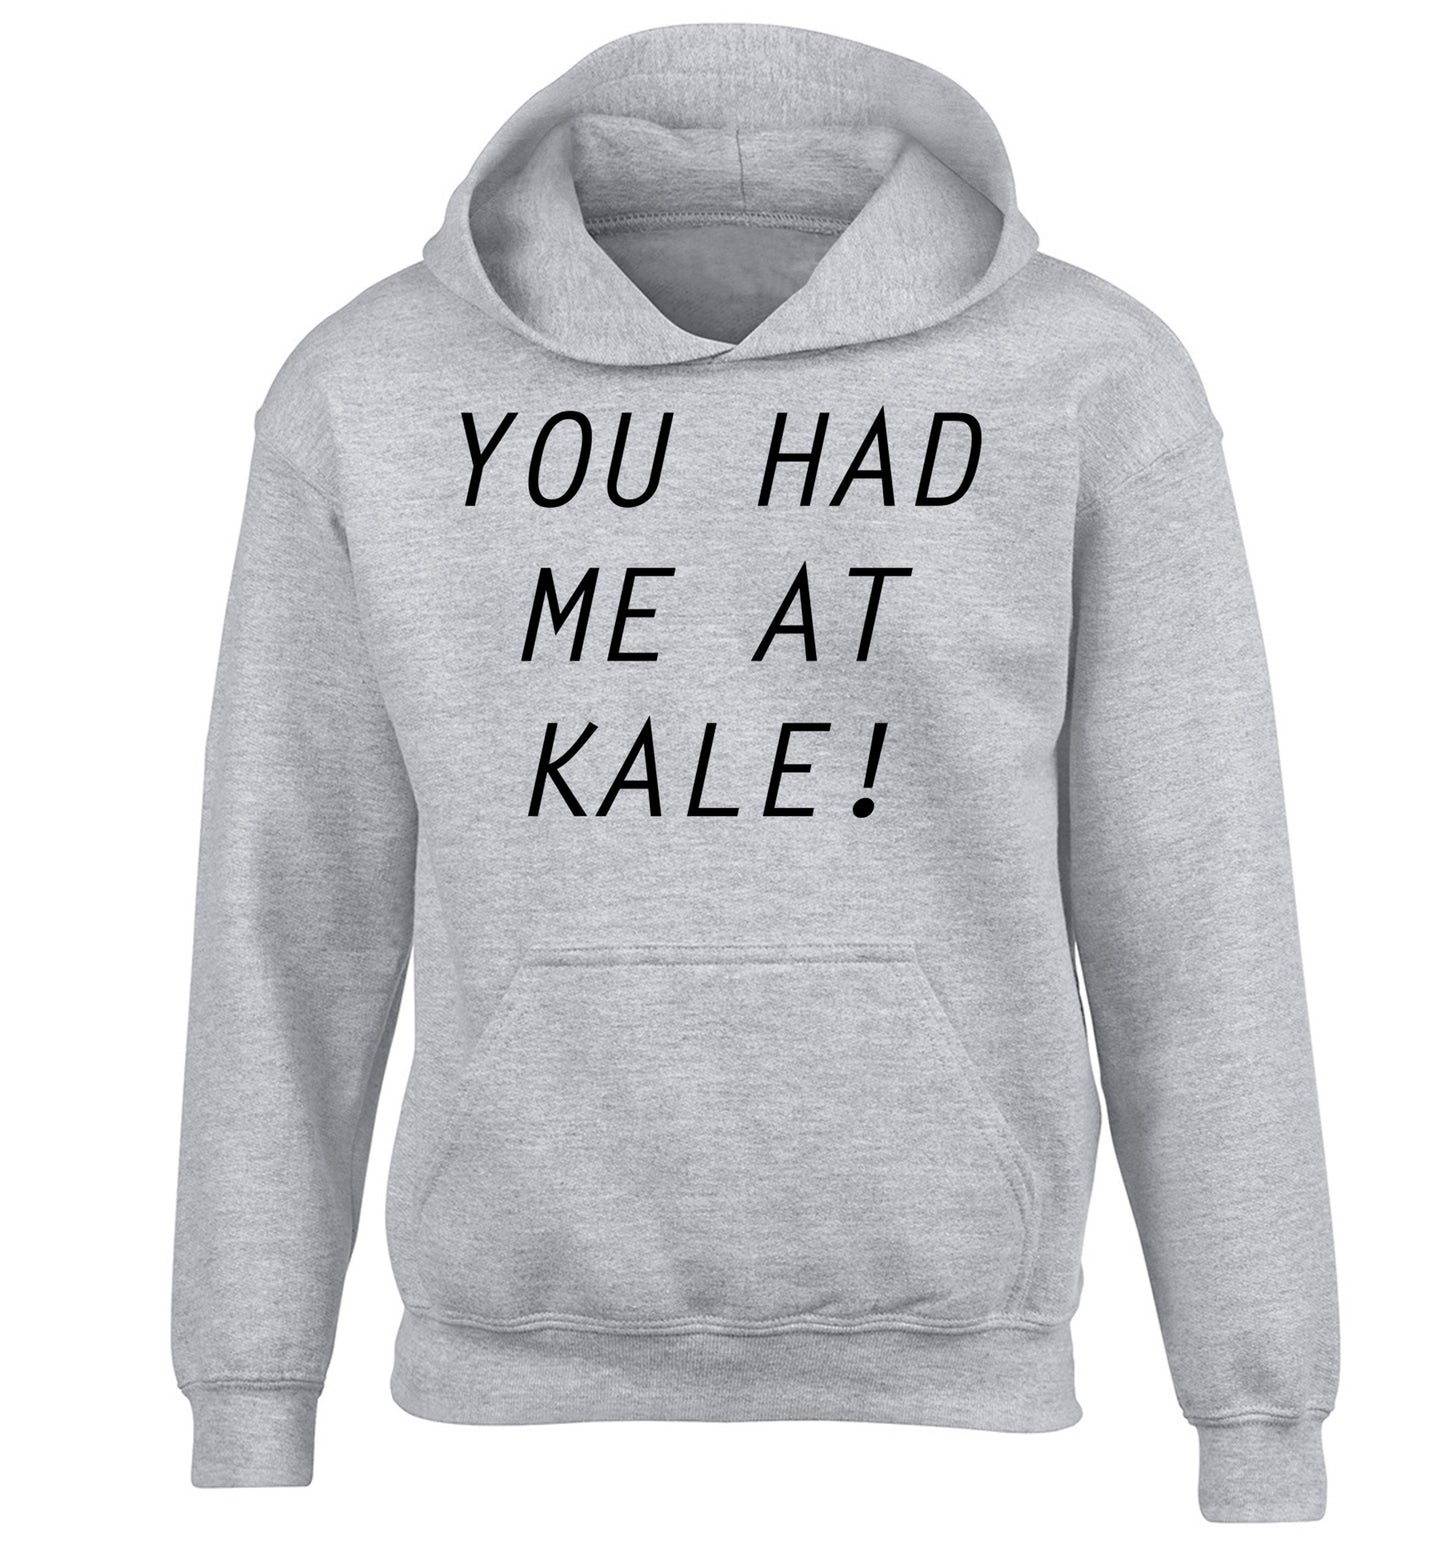 You had me at kale children's grey hoodie 12-14 Years